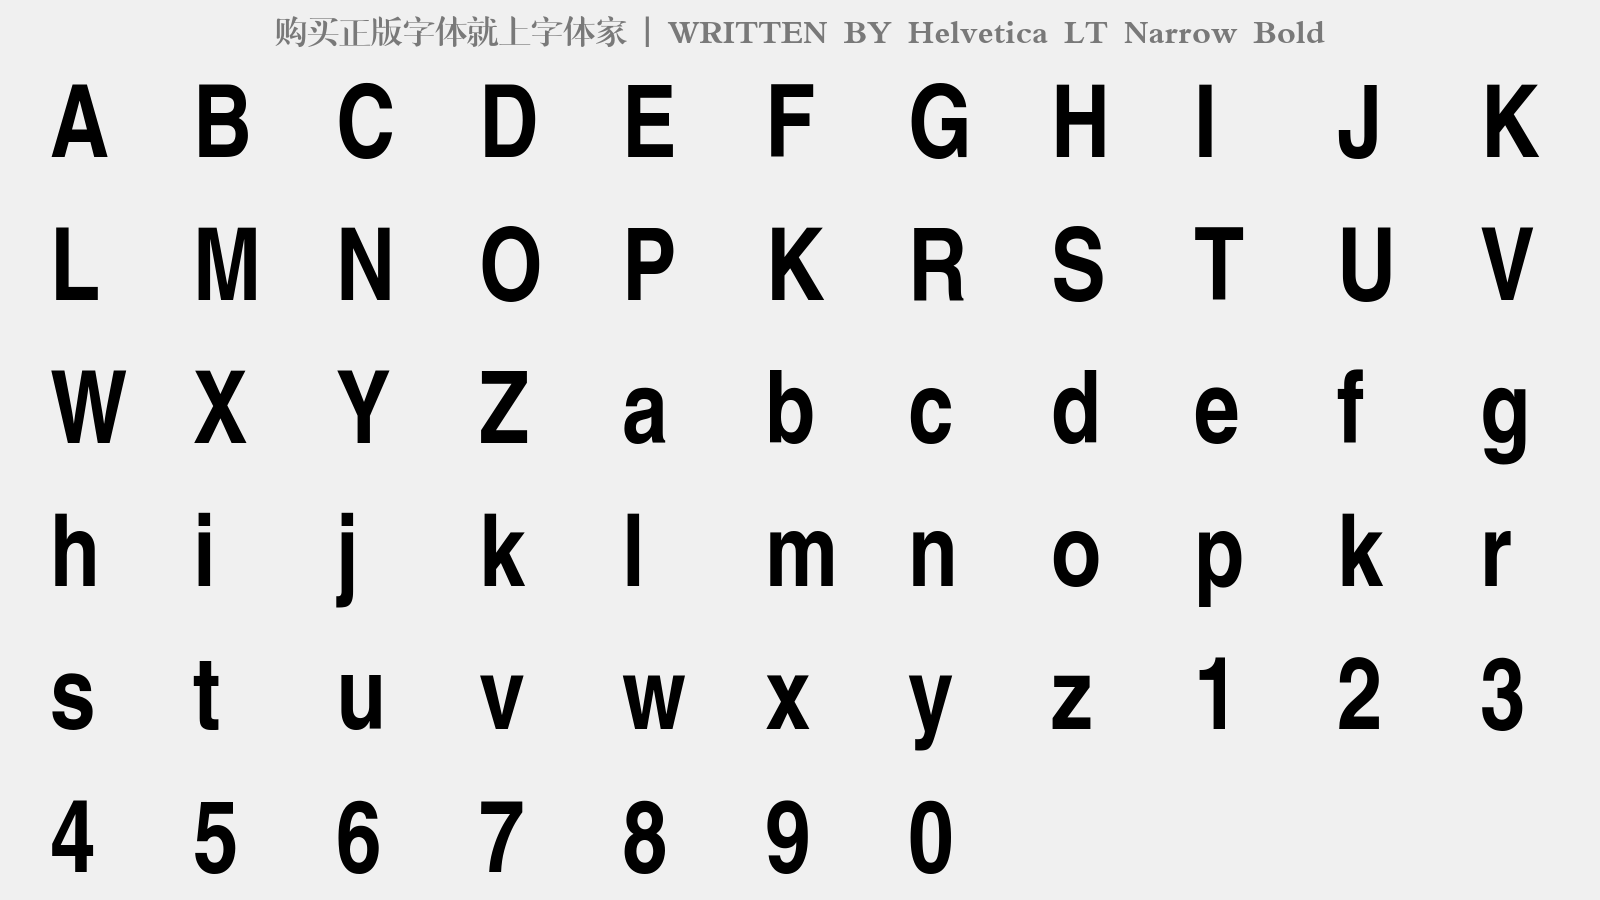 Helvetica LT Narrow Bold - 大写字母/小写字母/数字